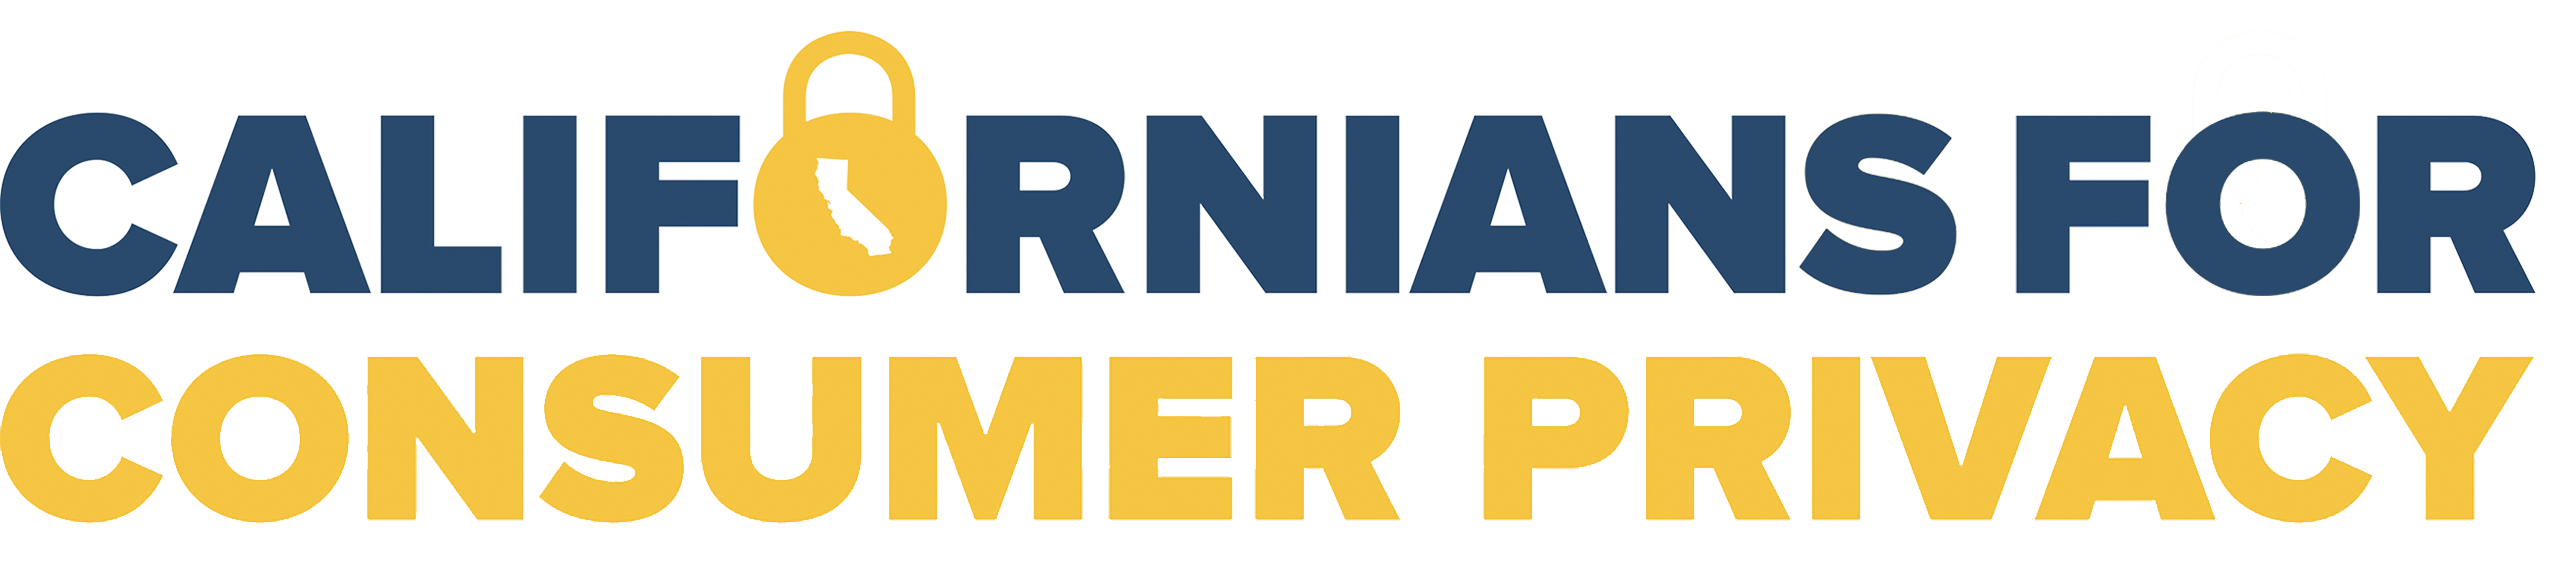 Californians for Consumer Privacy logo